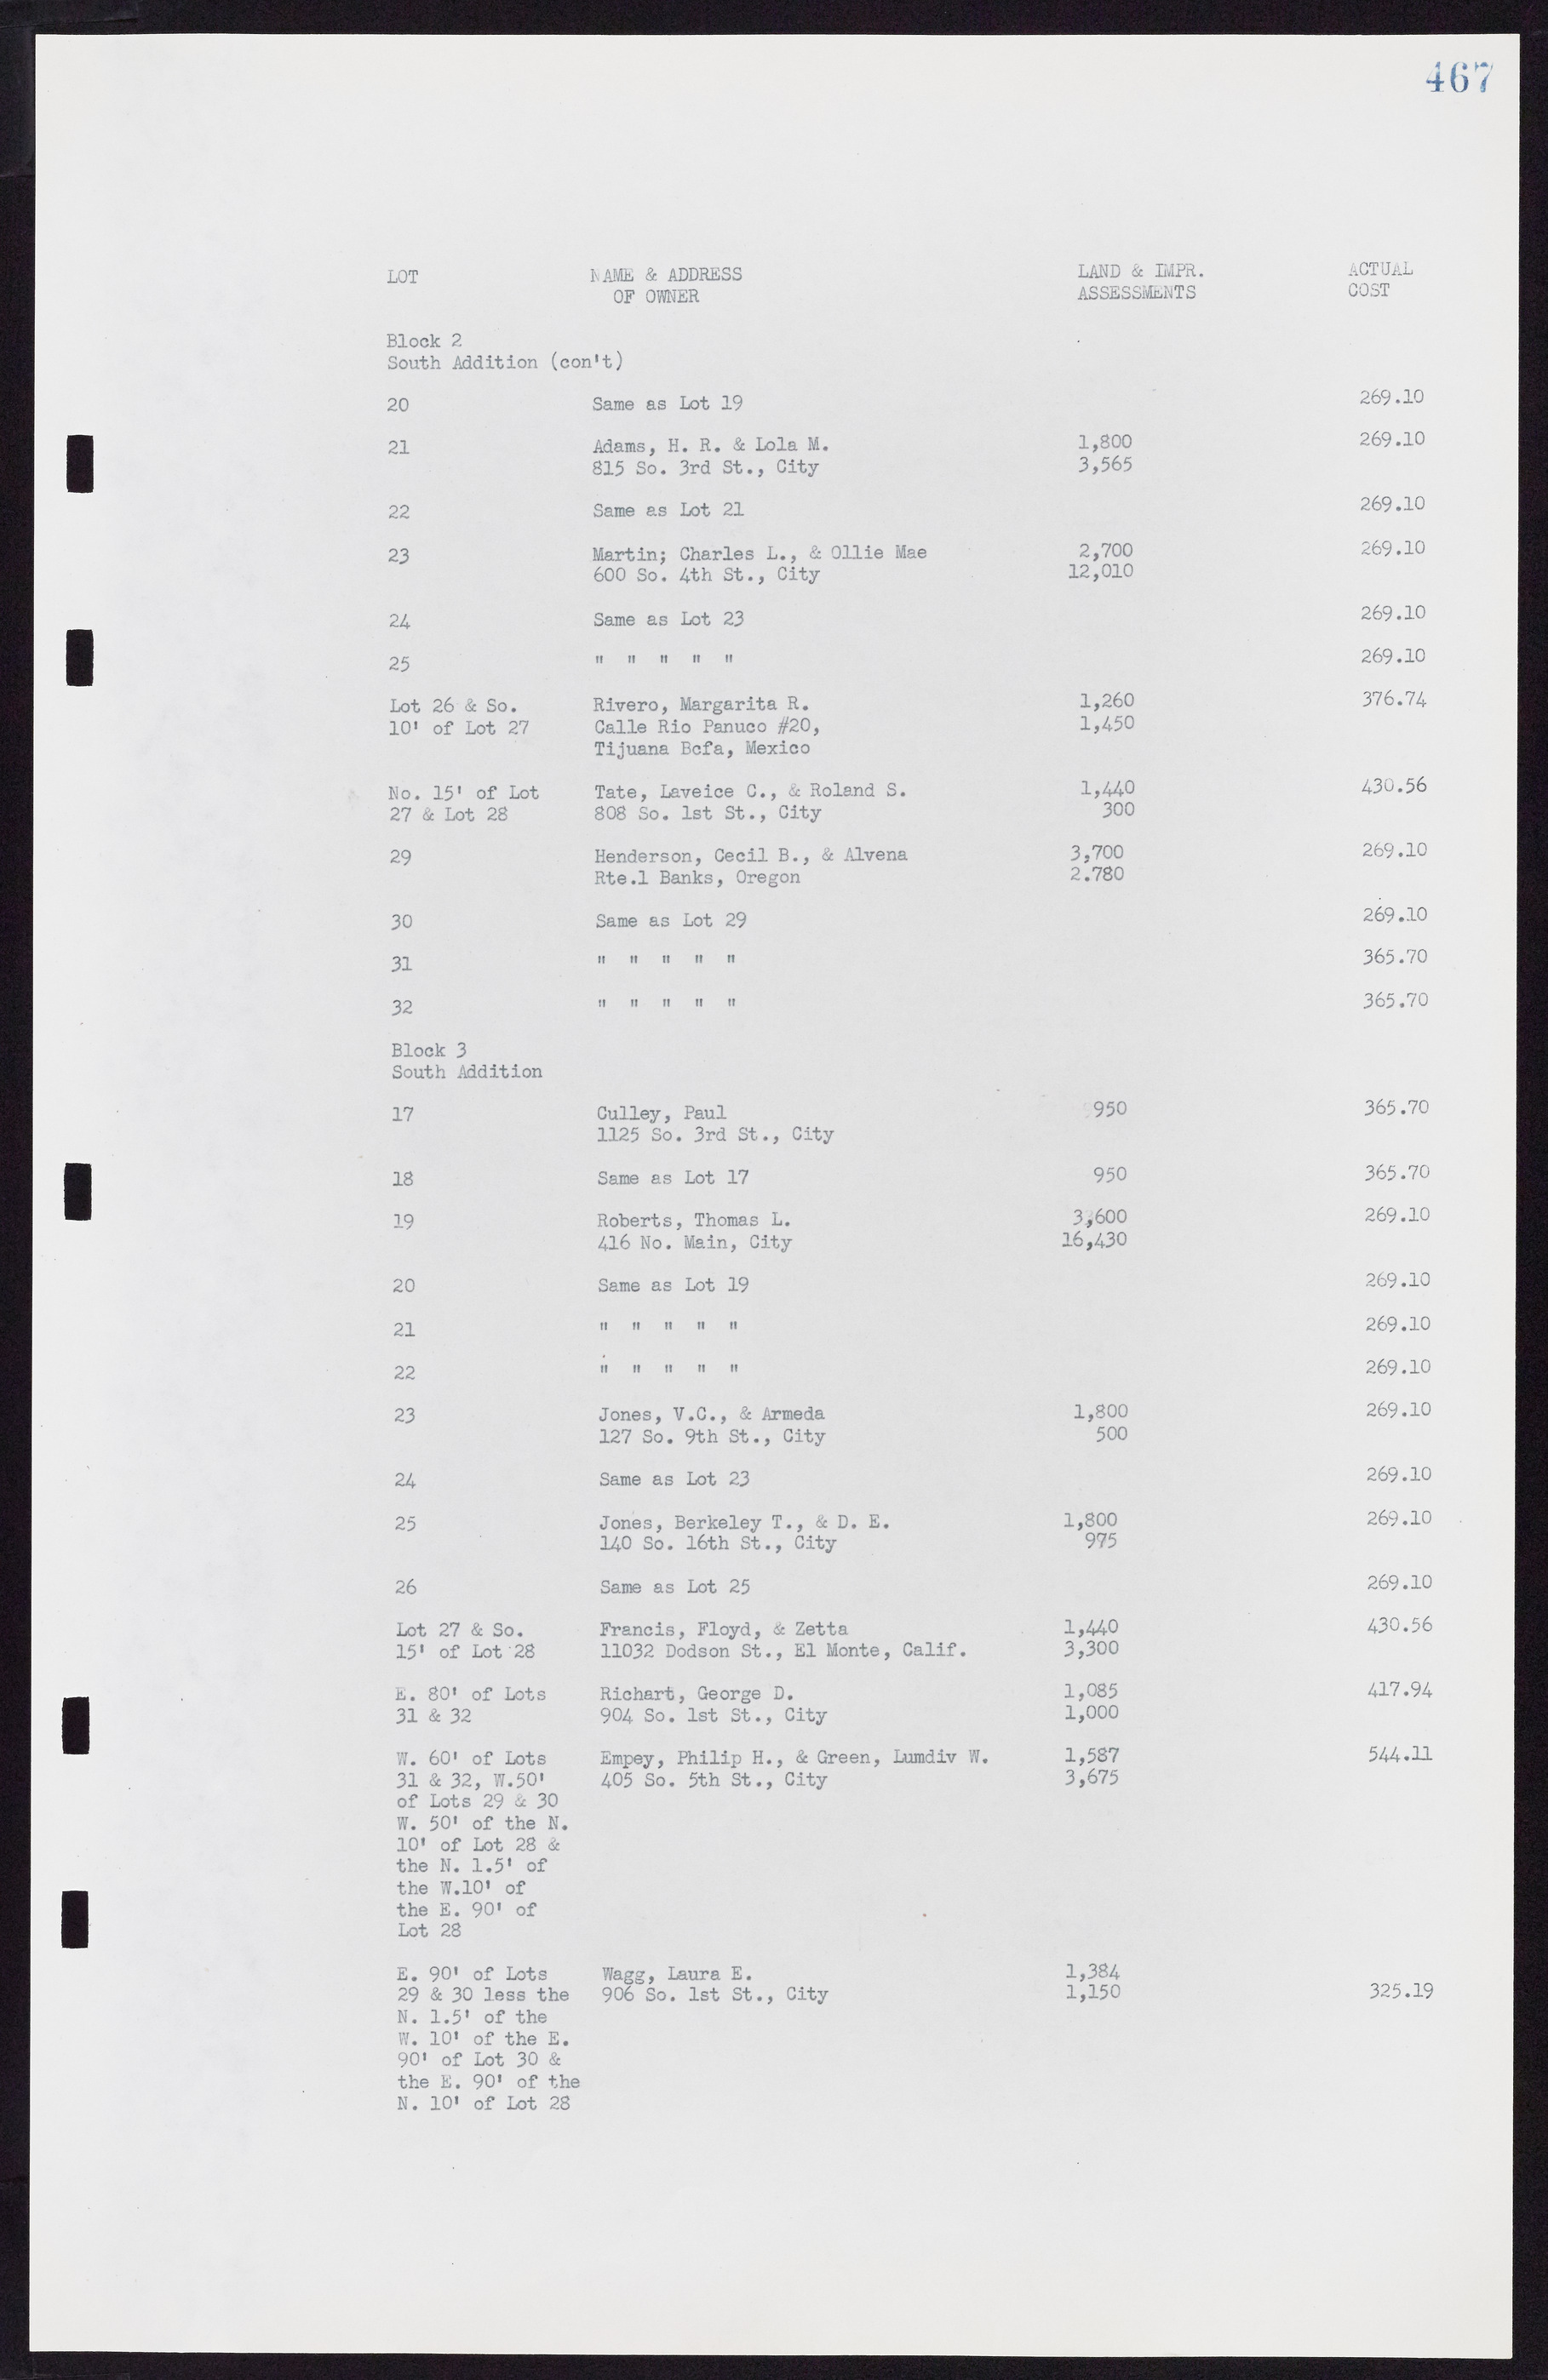 Las Vegas City Commission Minutes, November 7, 1949 to May 21, 1952, lvc000007-483